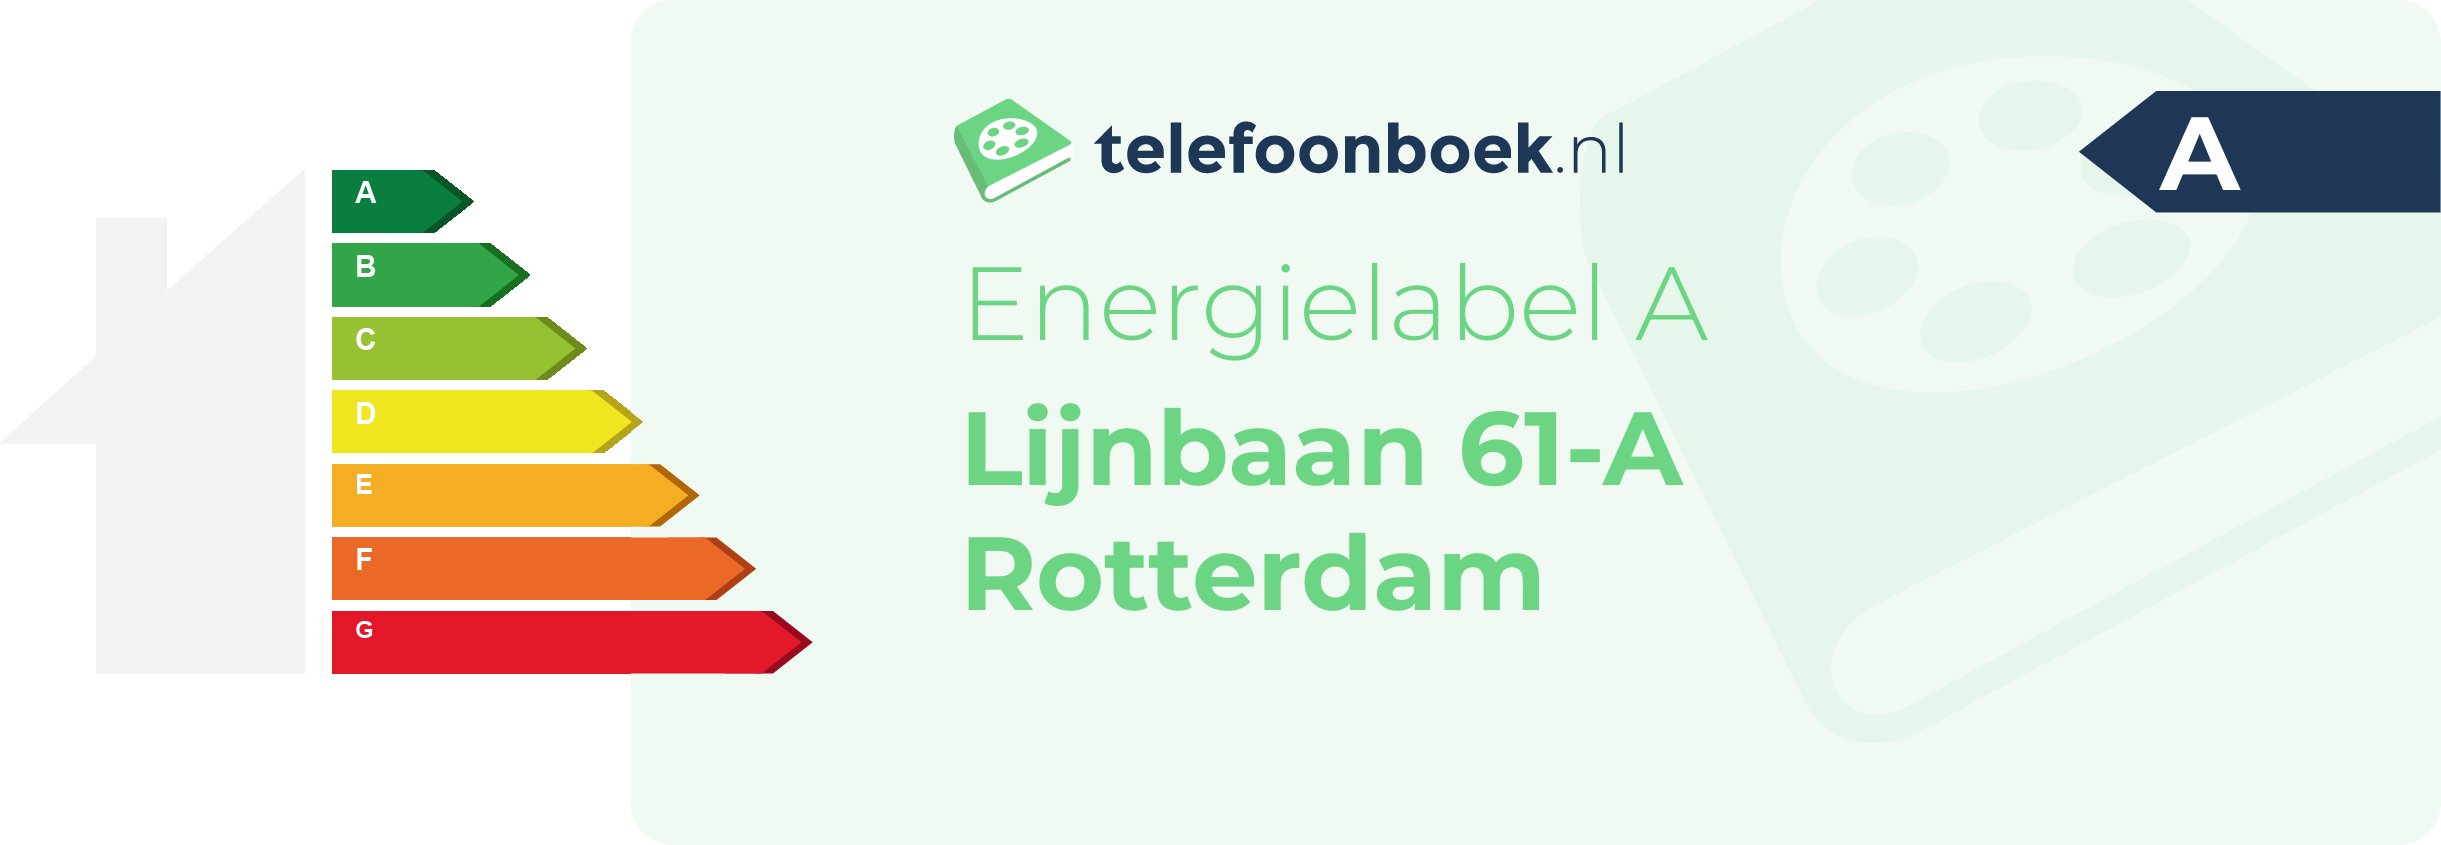 Energielabel Lijnbaan 61-A Rotterdam